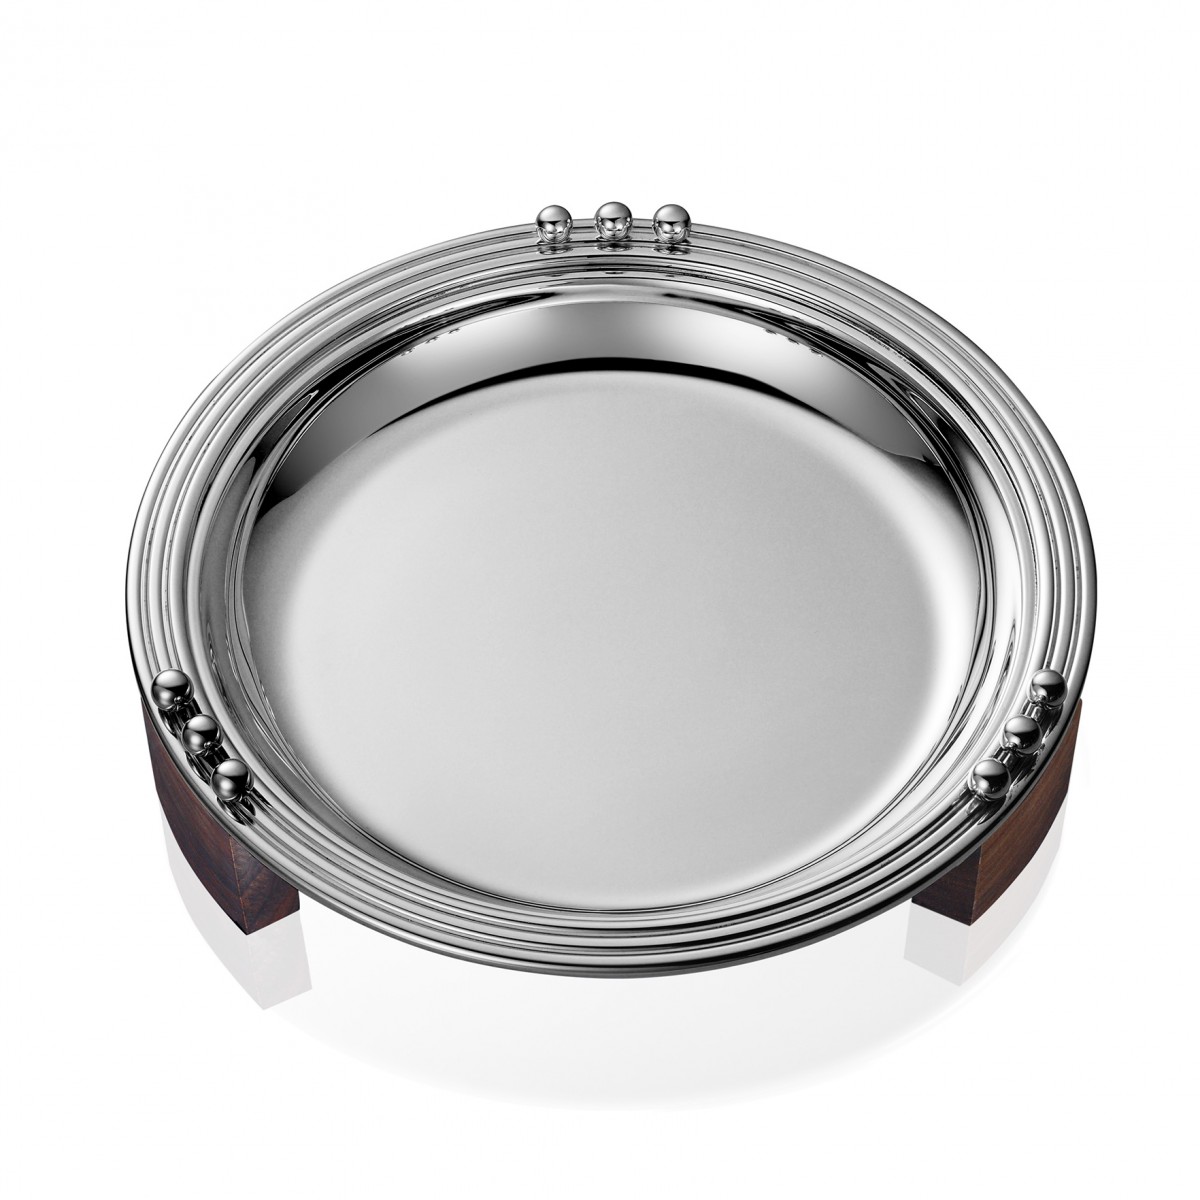 Etchéa - Art Déco 1937 Small Bowl 18.8 Cm (Silver Plated) | Highlight image